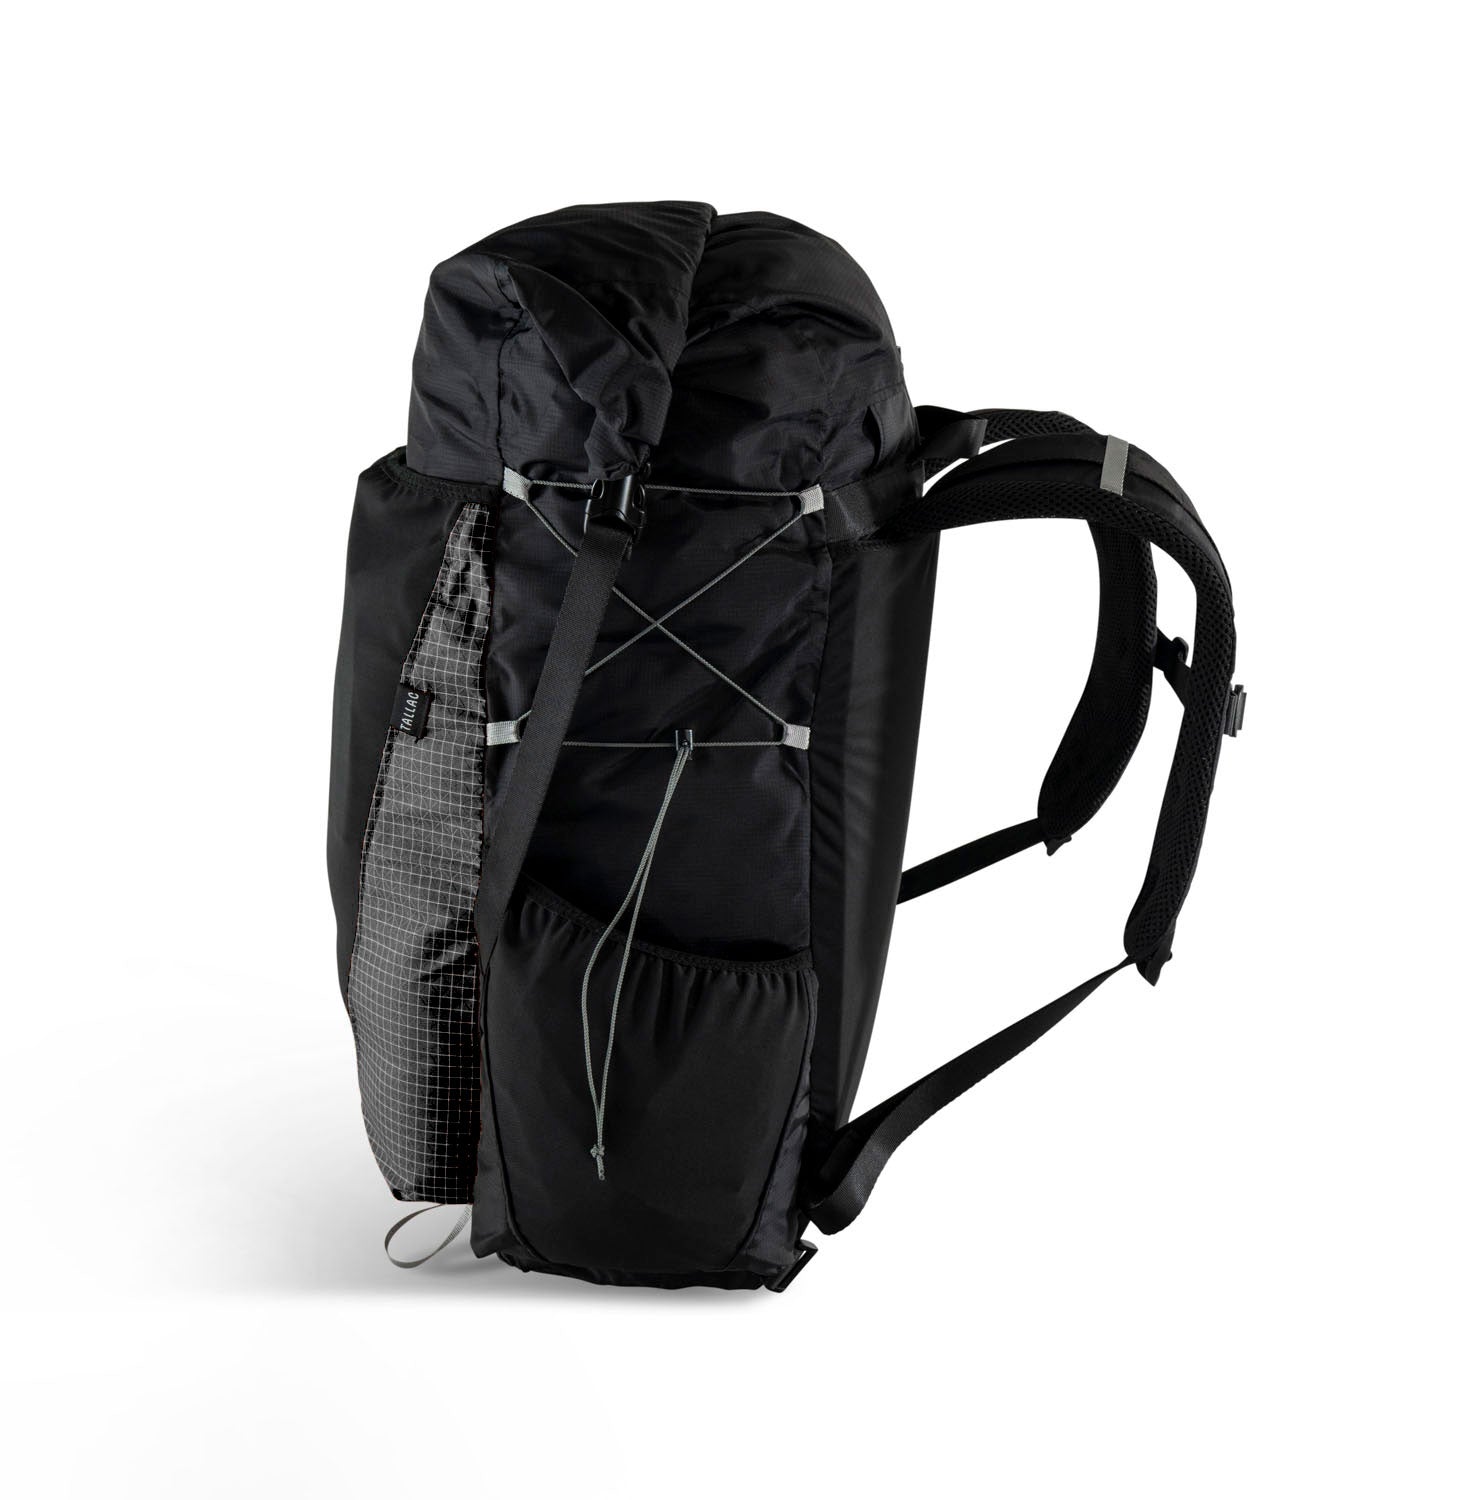 Ultralight 3/32 Shock Cord  Lightest Universal Backpack Hiking